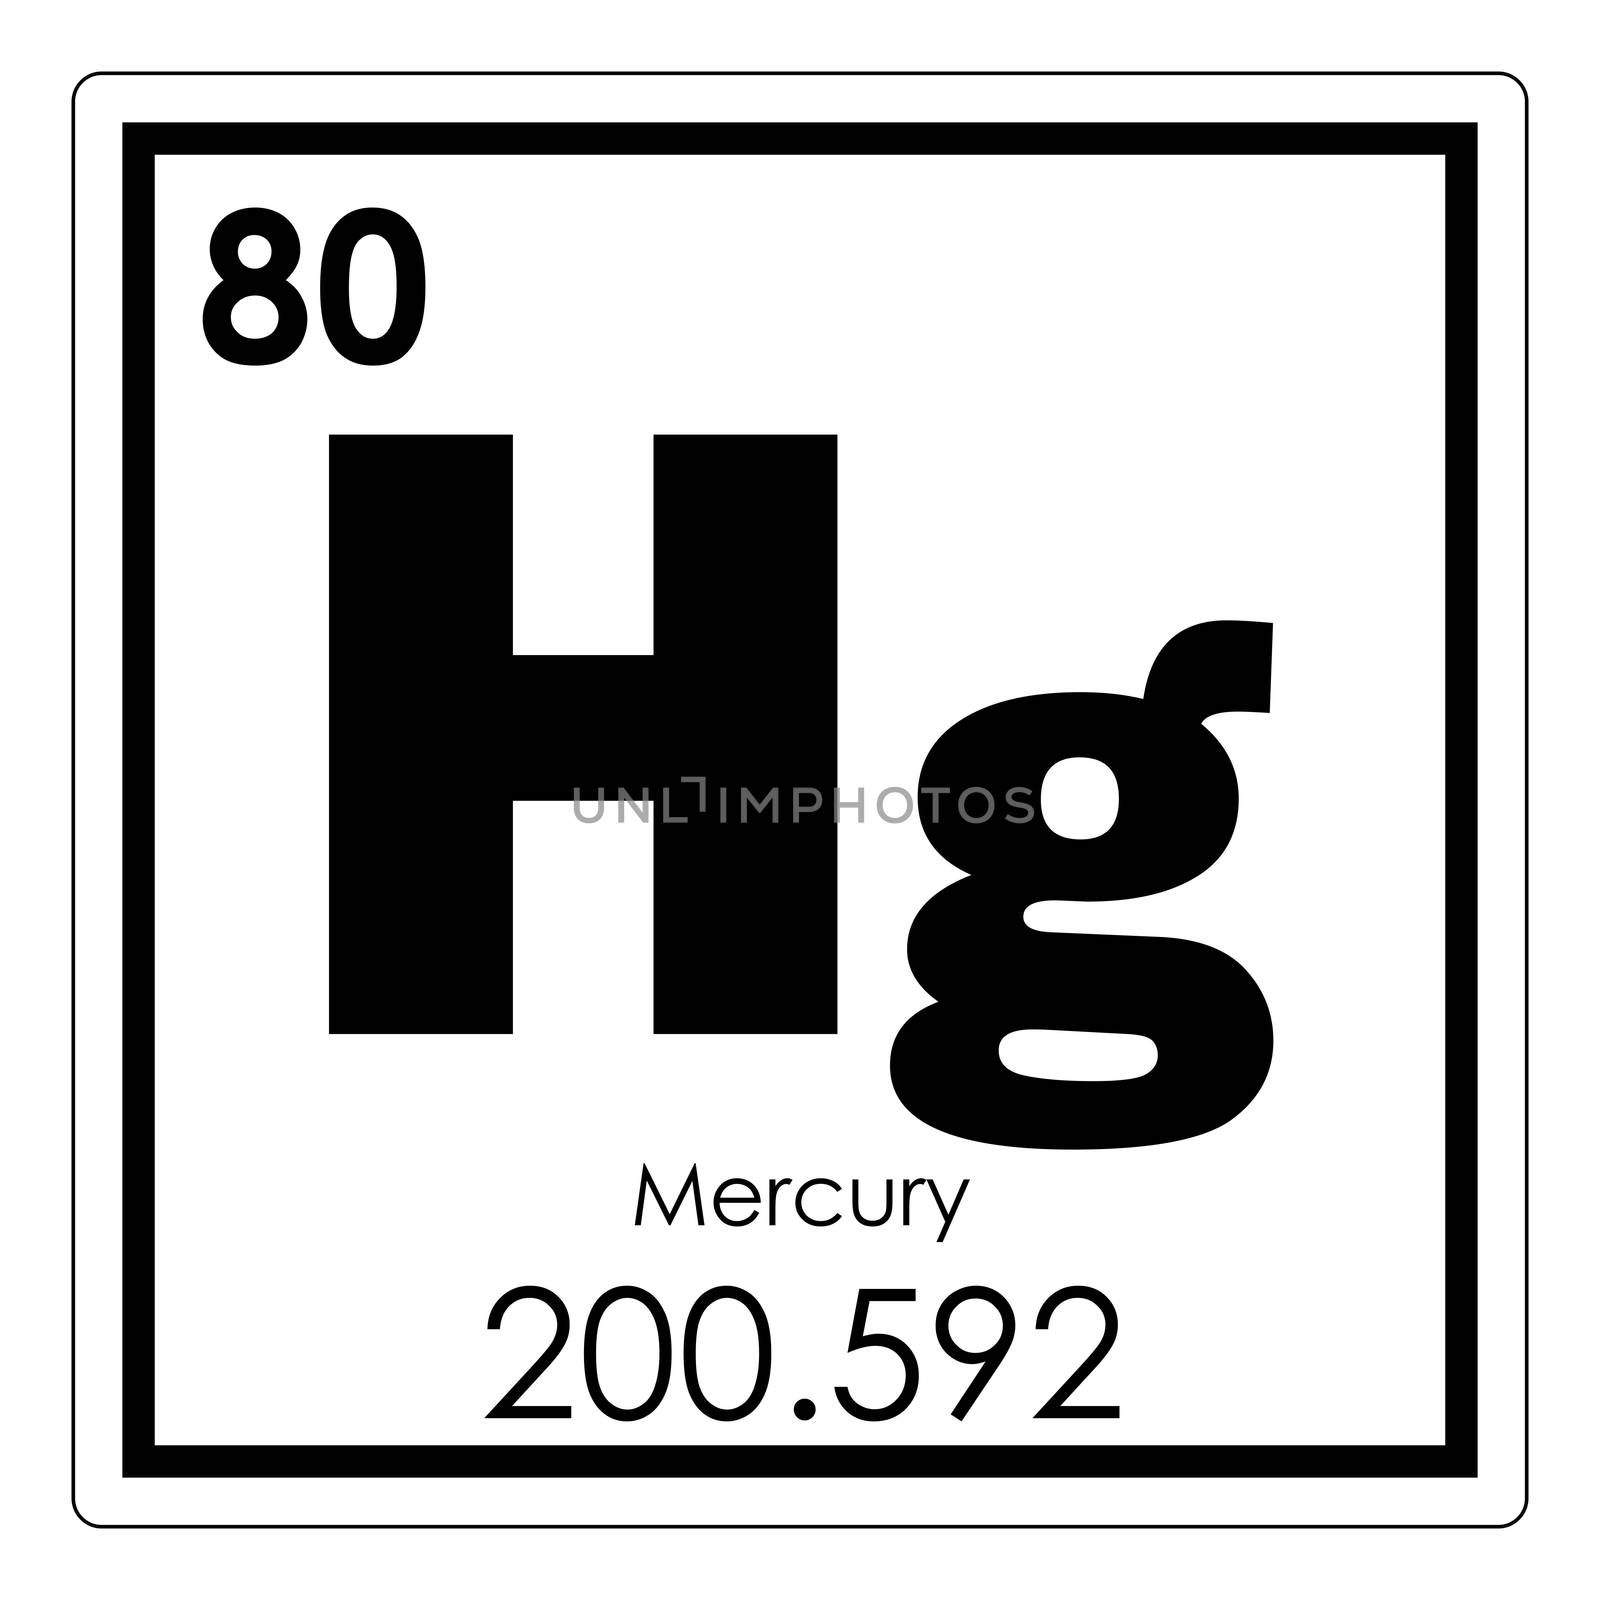 Mercury chemical element by tony4urban